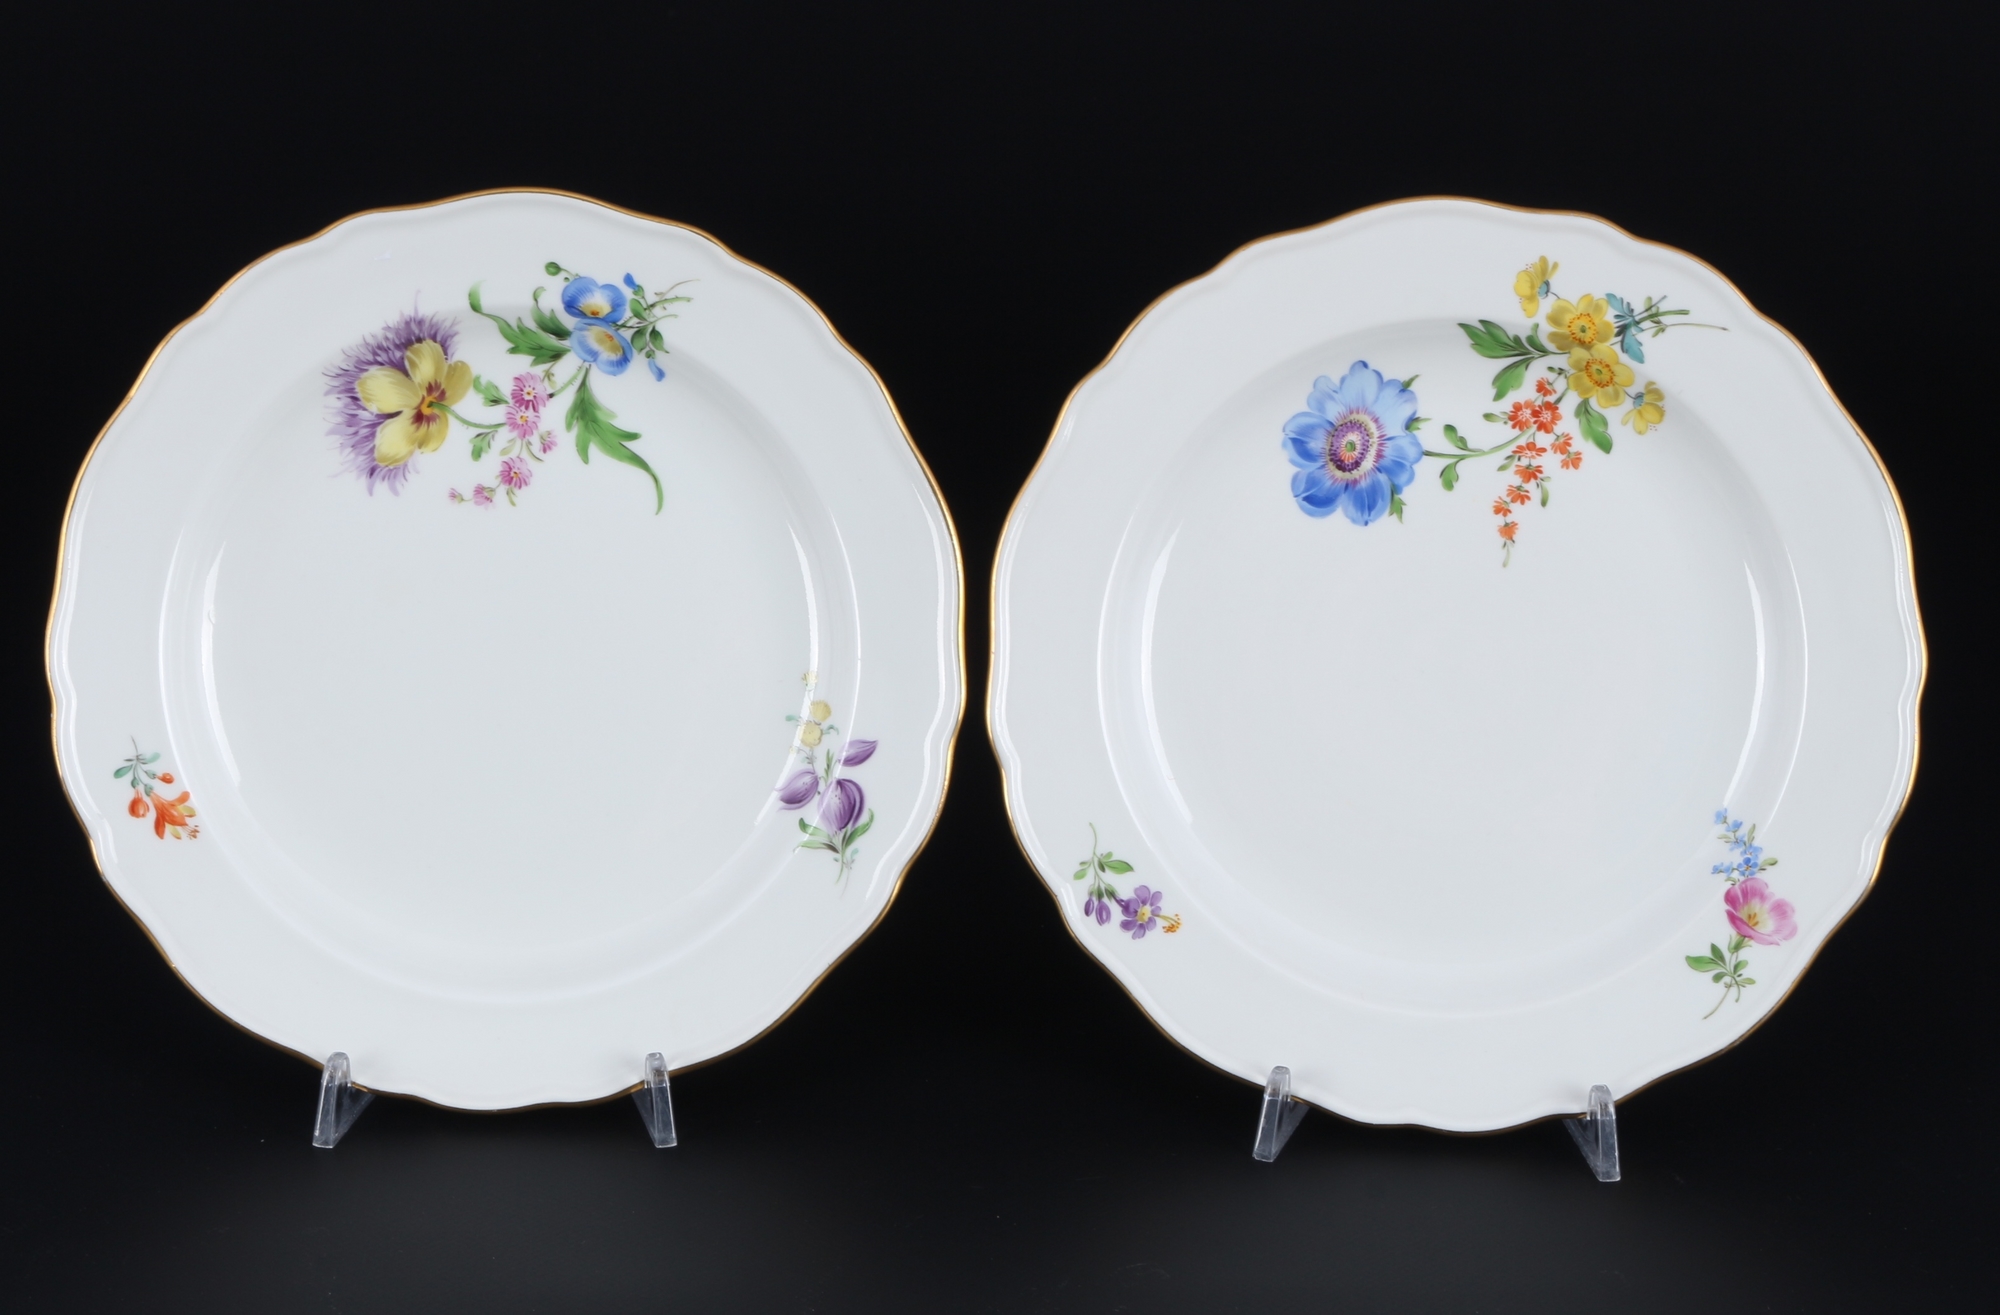 Meissen Blume 5 große Speiseteller und 5 mittlere Teller 1.Wahl, large and small dining plates, - Image 2 of 7